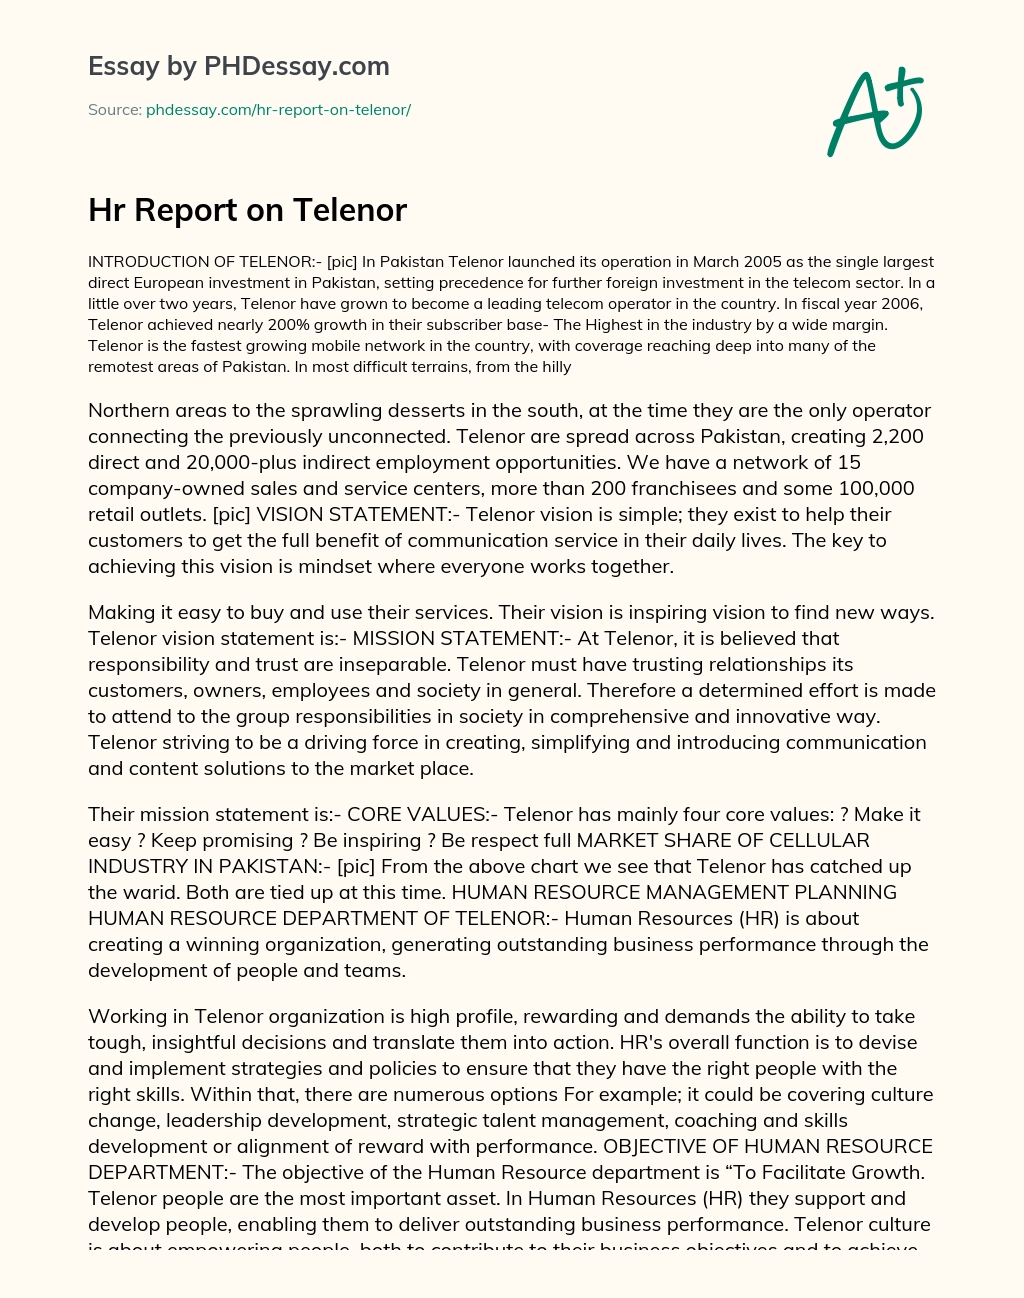 HR Report on Telenor essay